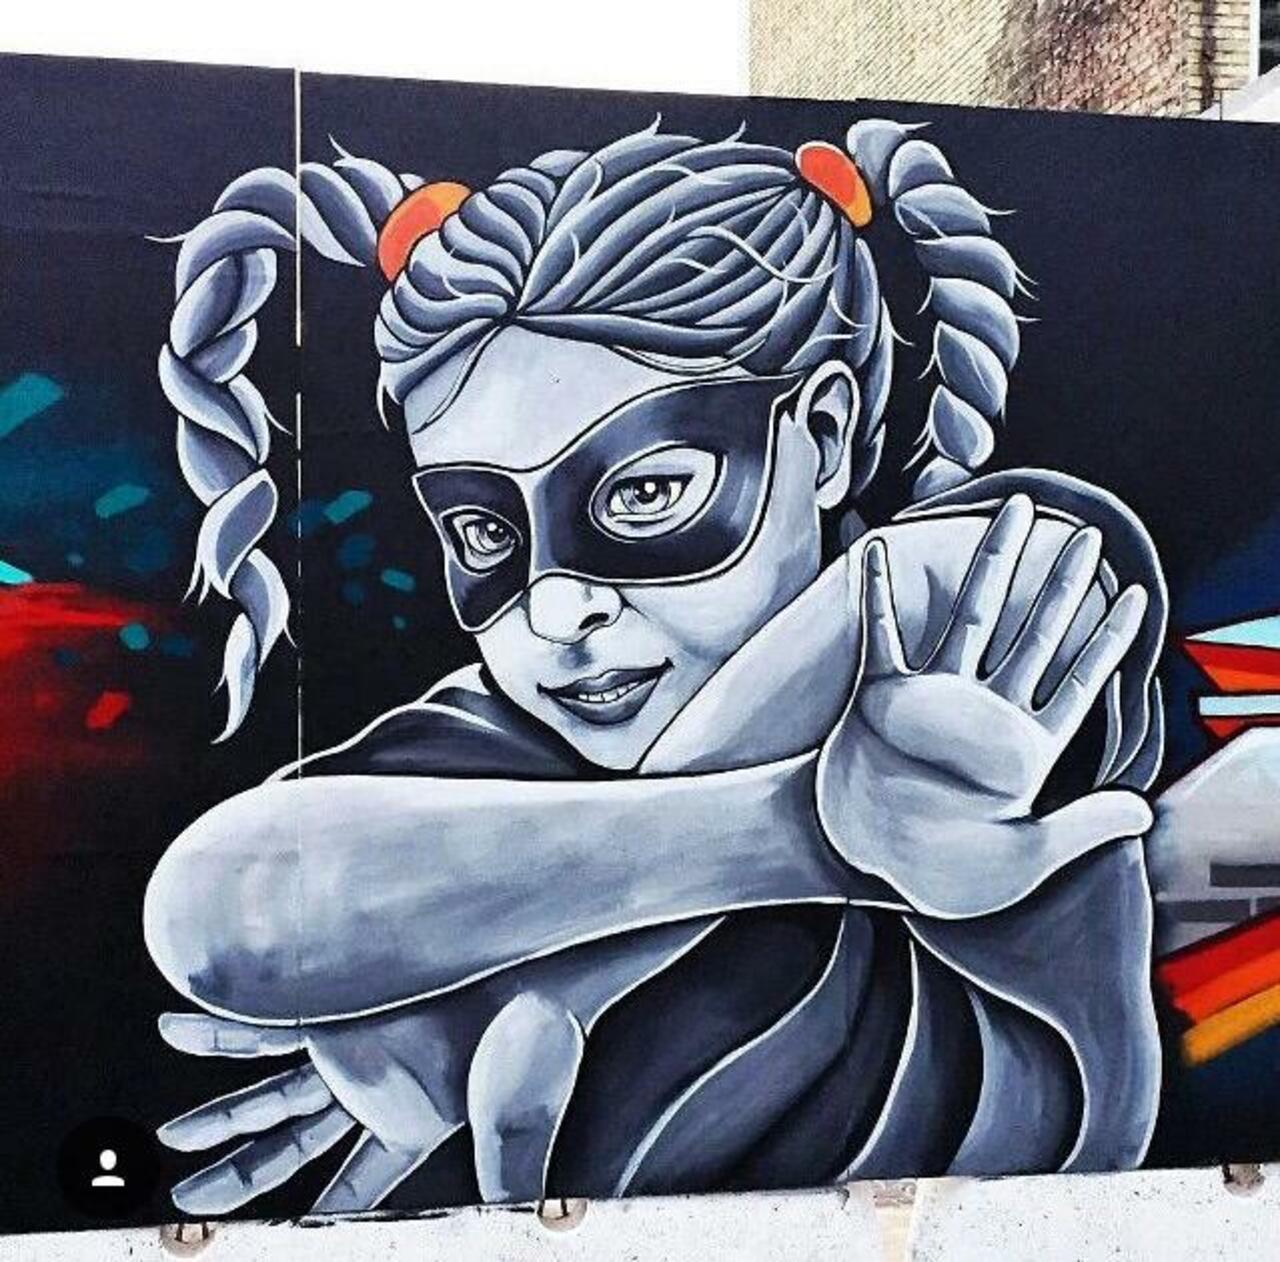 New tumblr post: "New tumblr post: "New tumblr post: "Street Art by Stinehvid 

#art #graffiti #mural #streetart http://t.co/BLLK9U3Rdh" ……